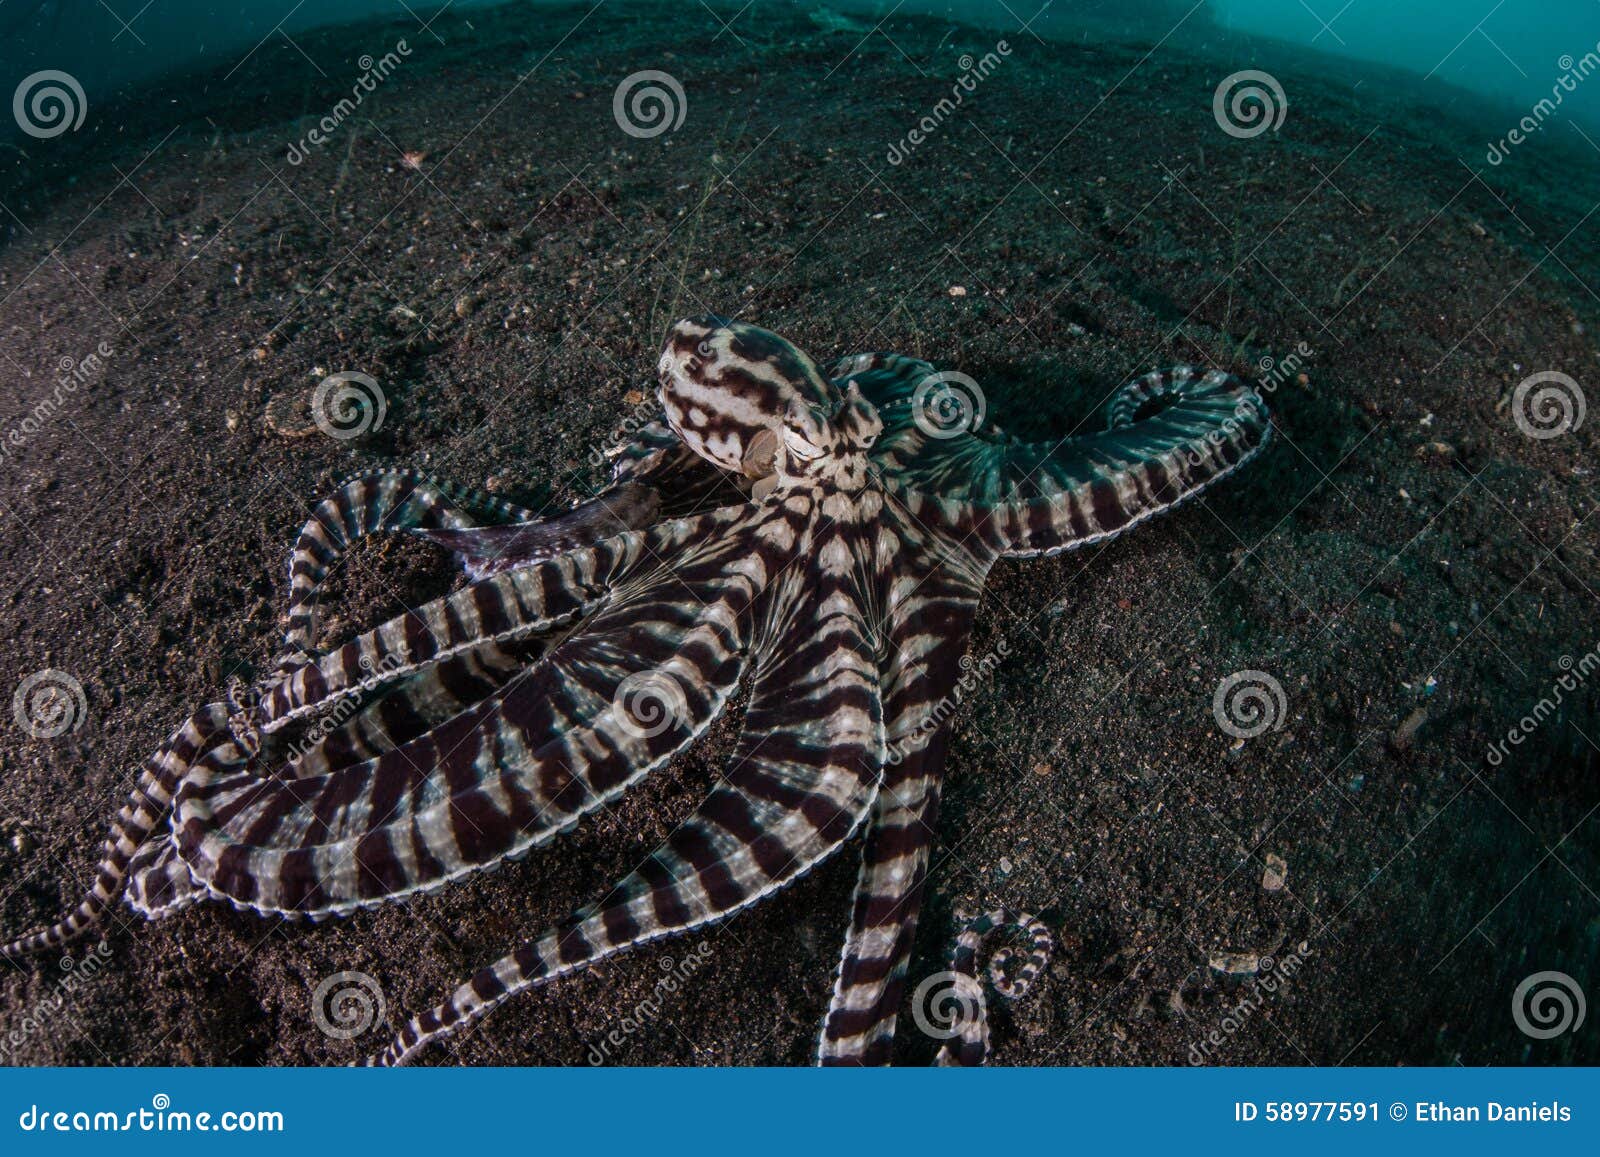 mimic octopus crawling on black sand